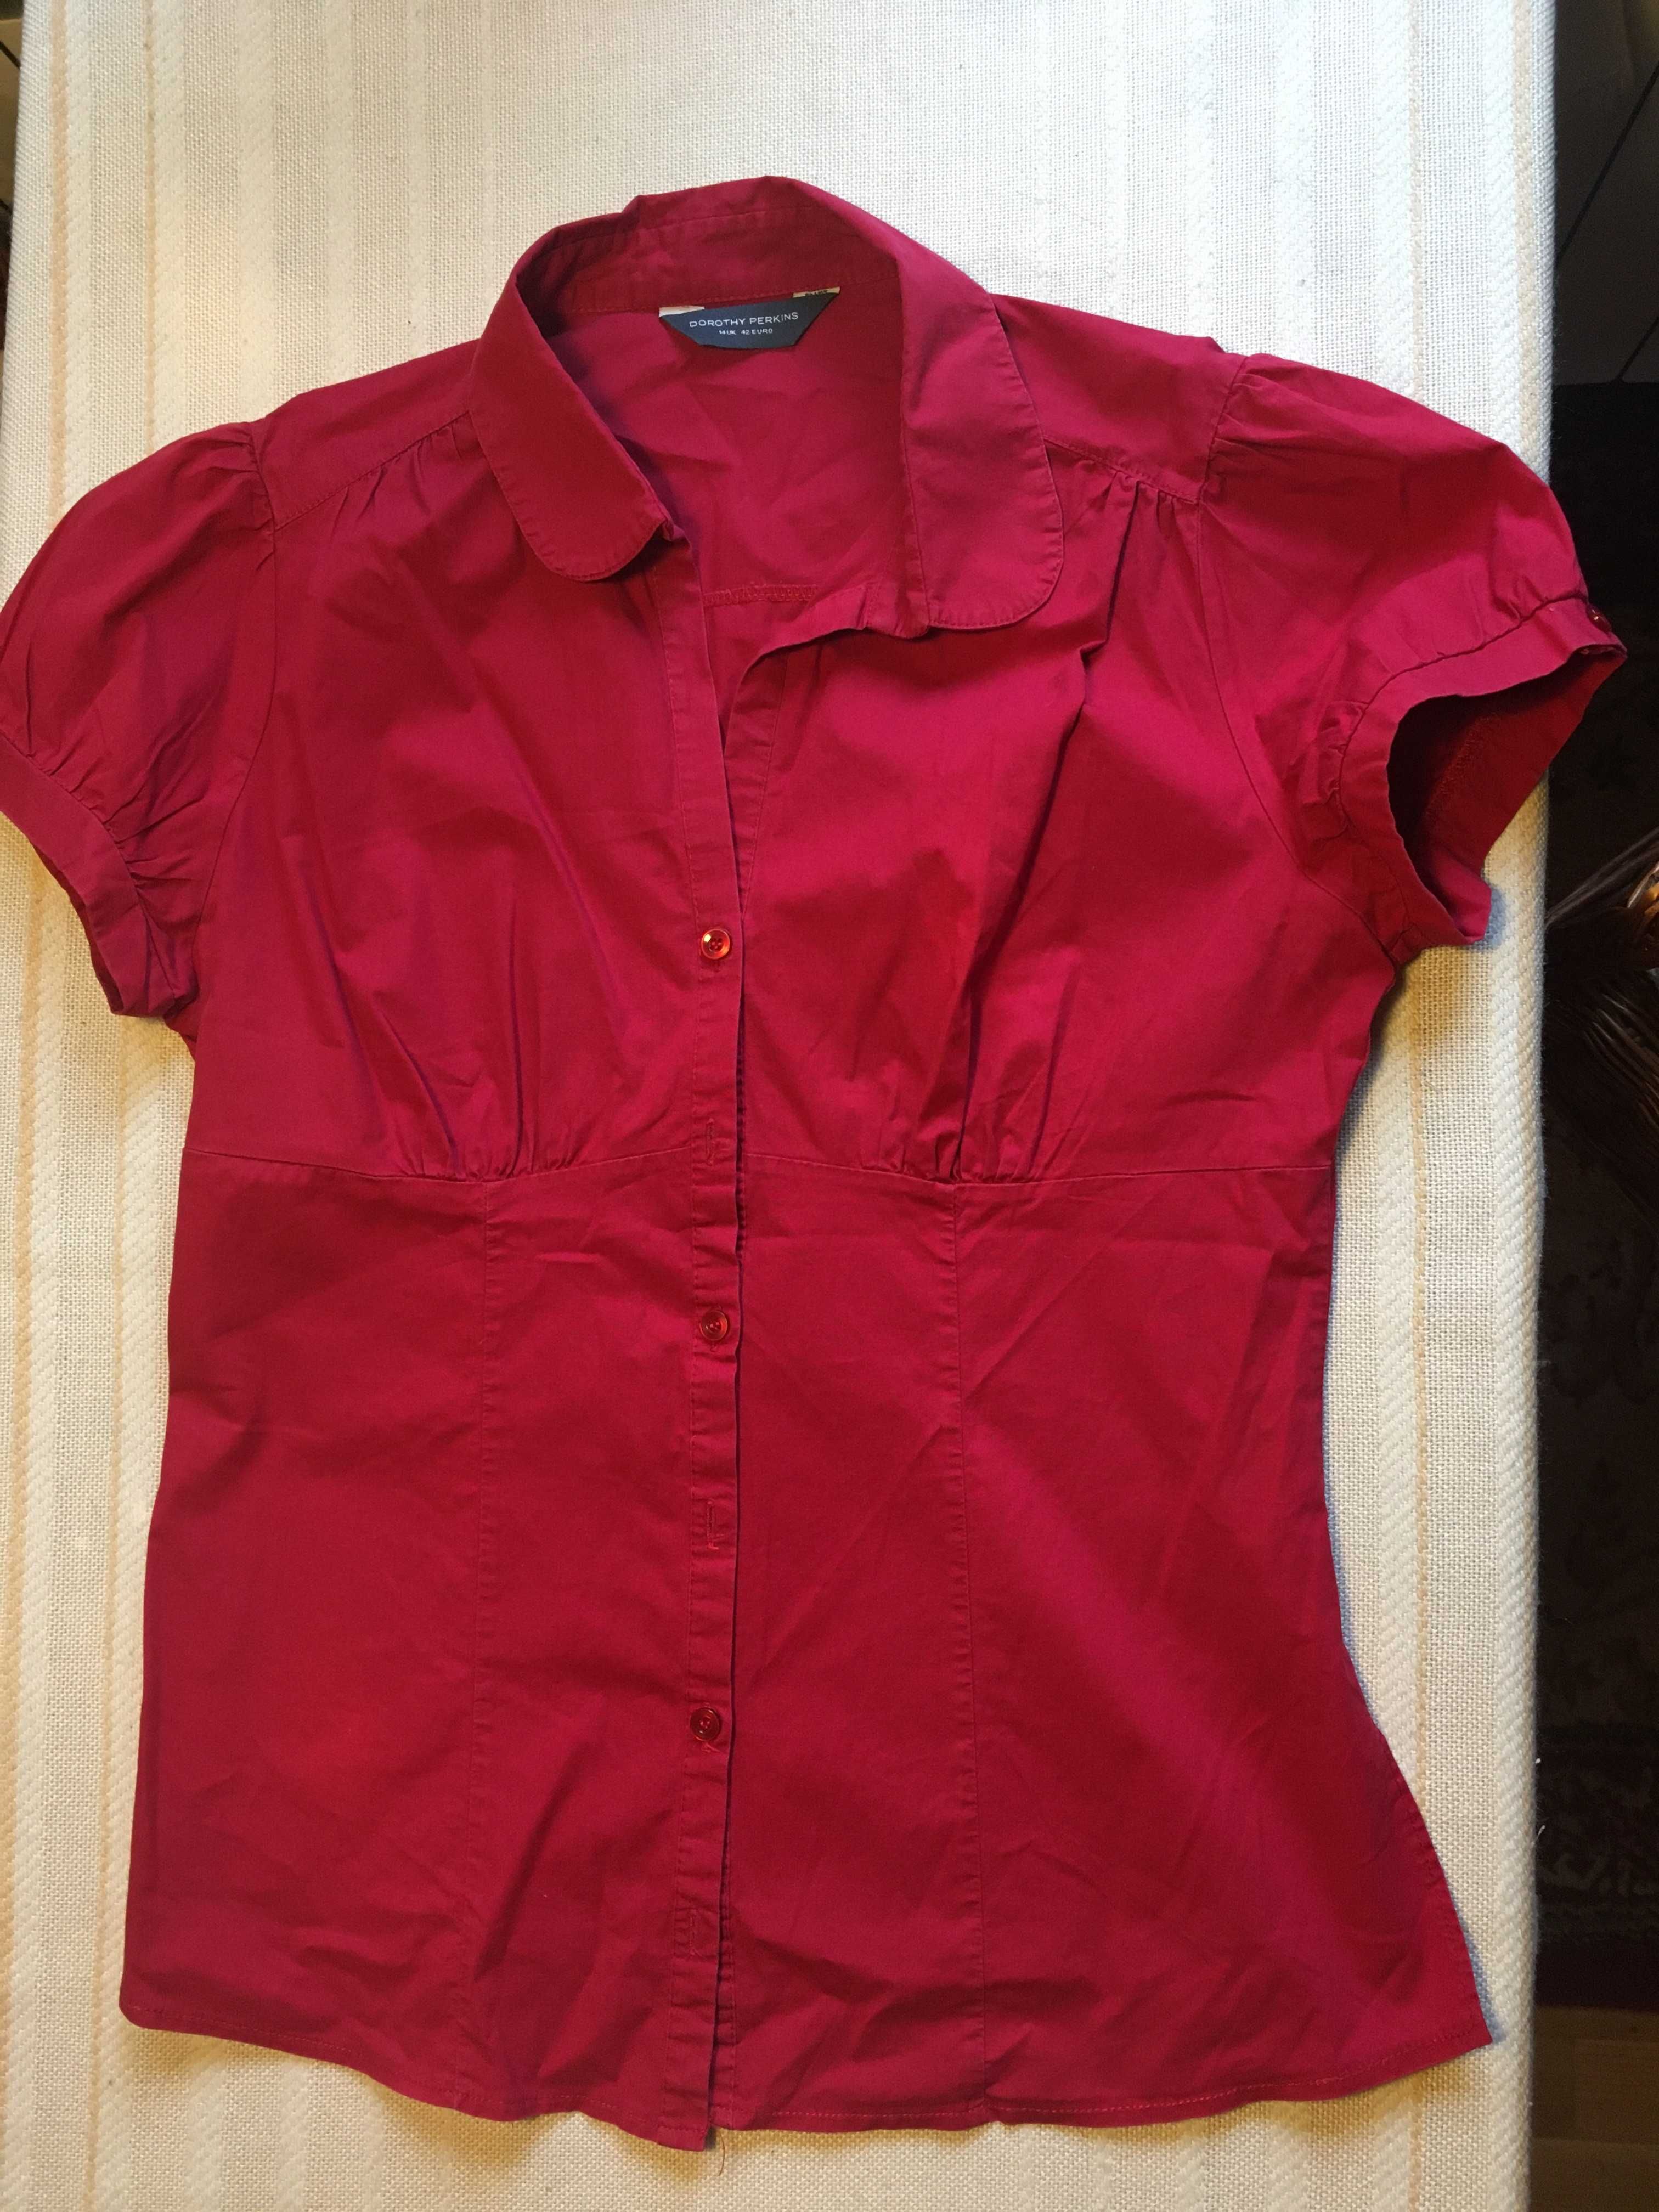 Bordowa bluzka Dorothy Perkins / rozmiar 42